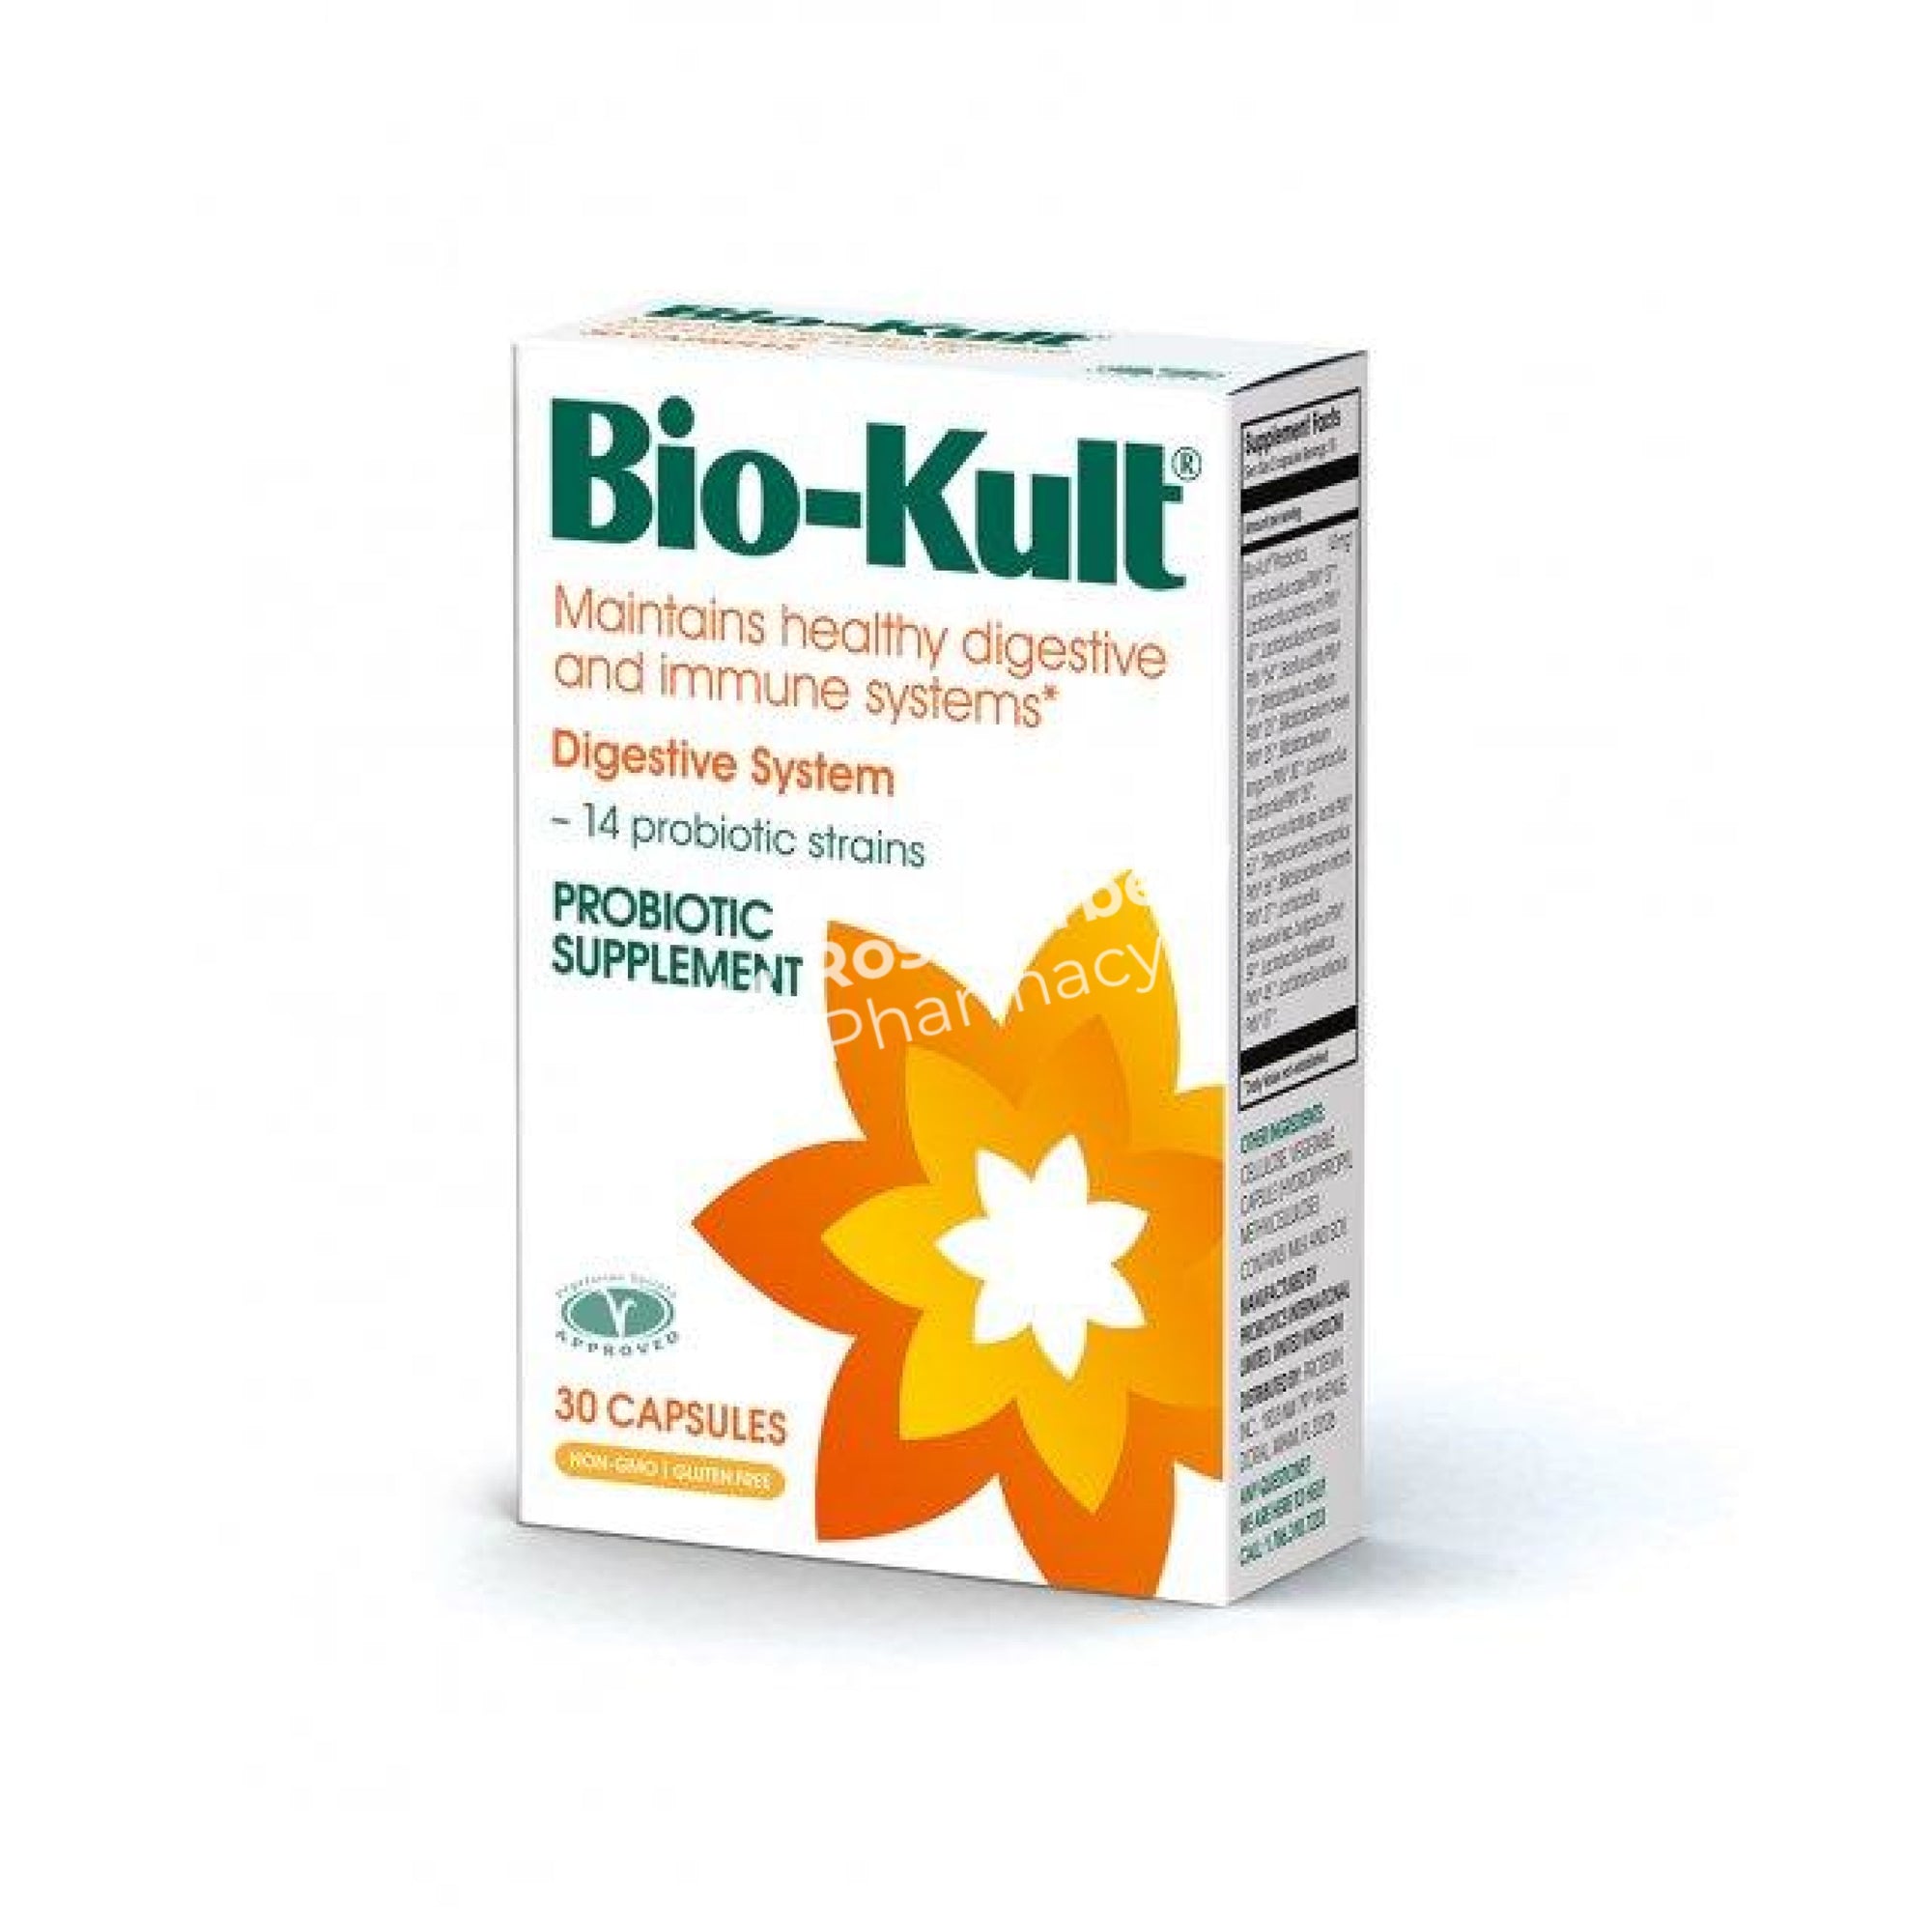 Bio-Kult Advanced Multi-Strain Formulation - Digesive System Probiotics & Digestive Health